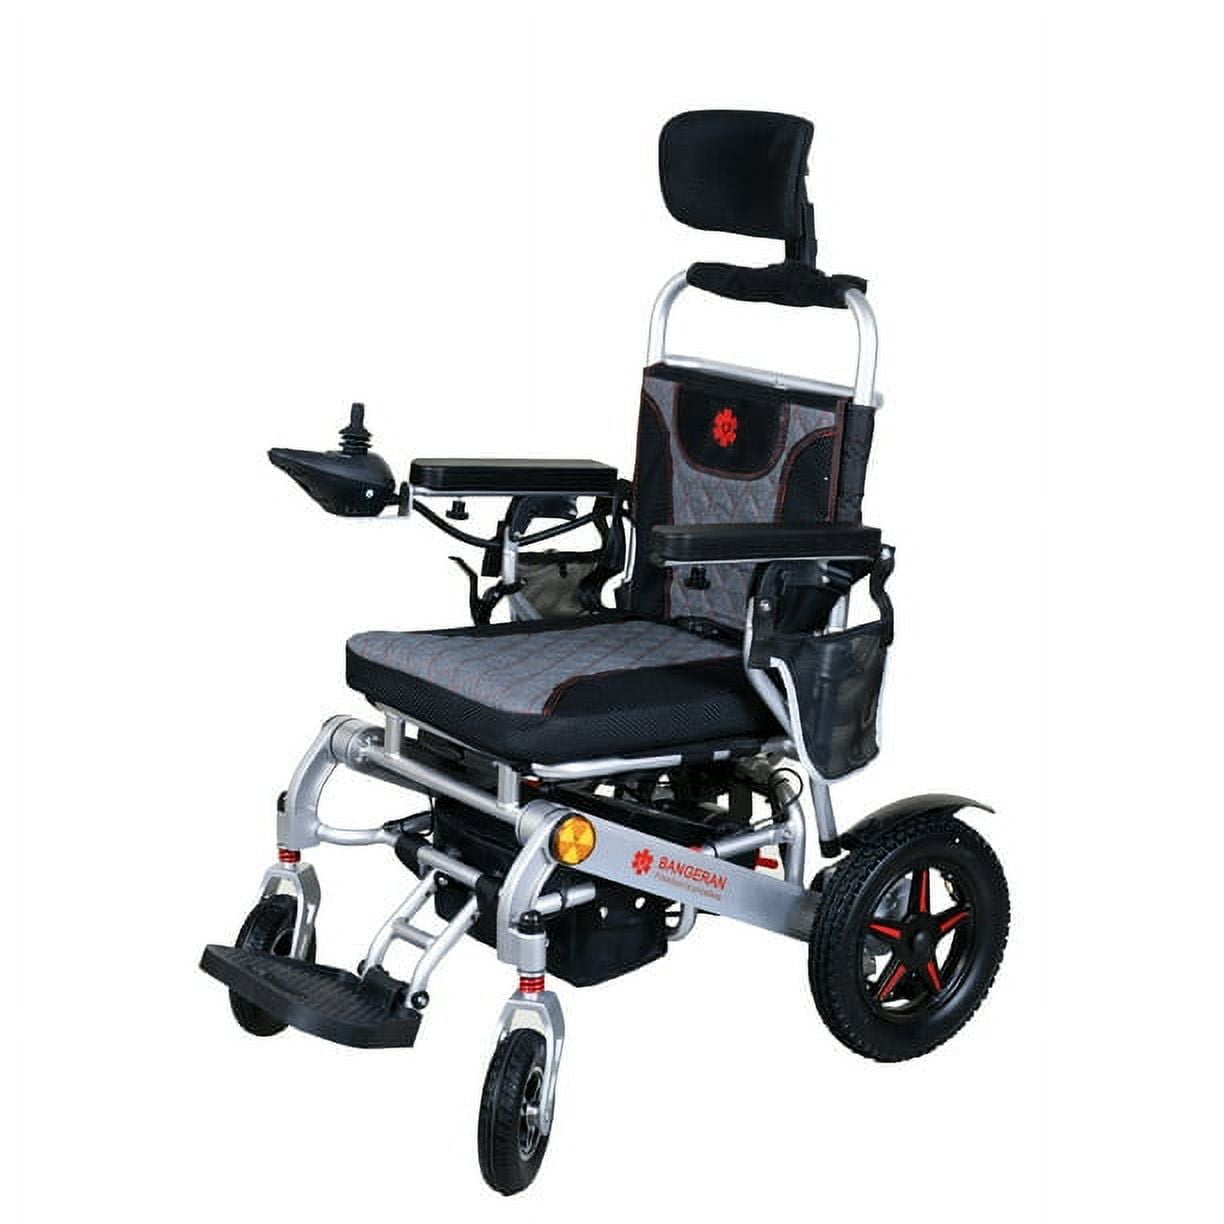 medical wheelchair accessories easy installation joystick